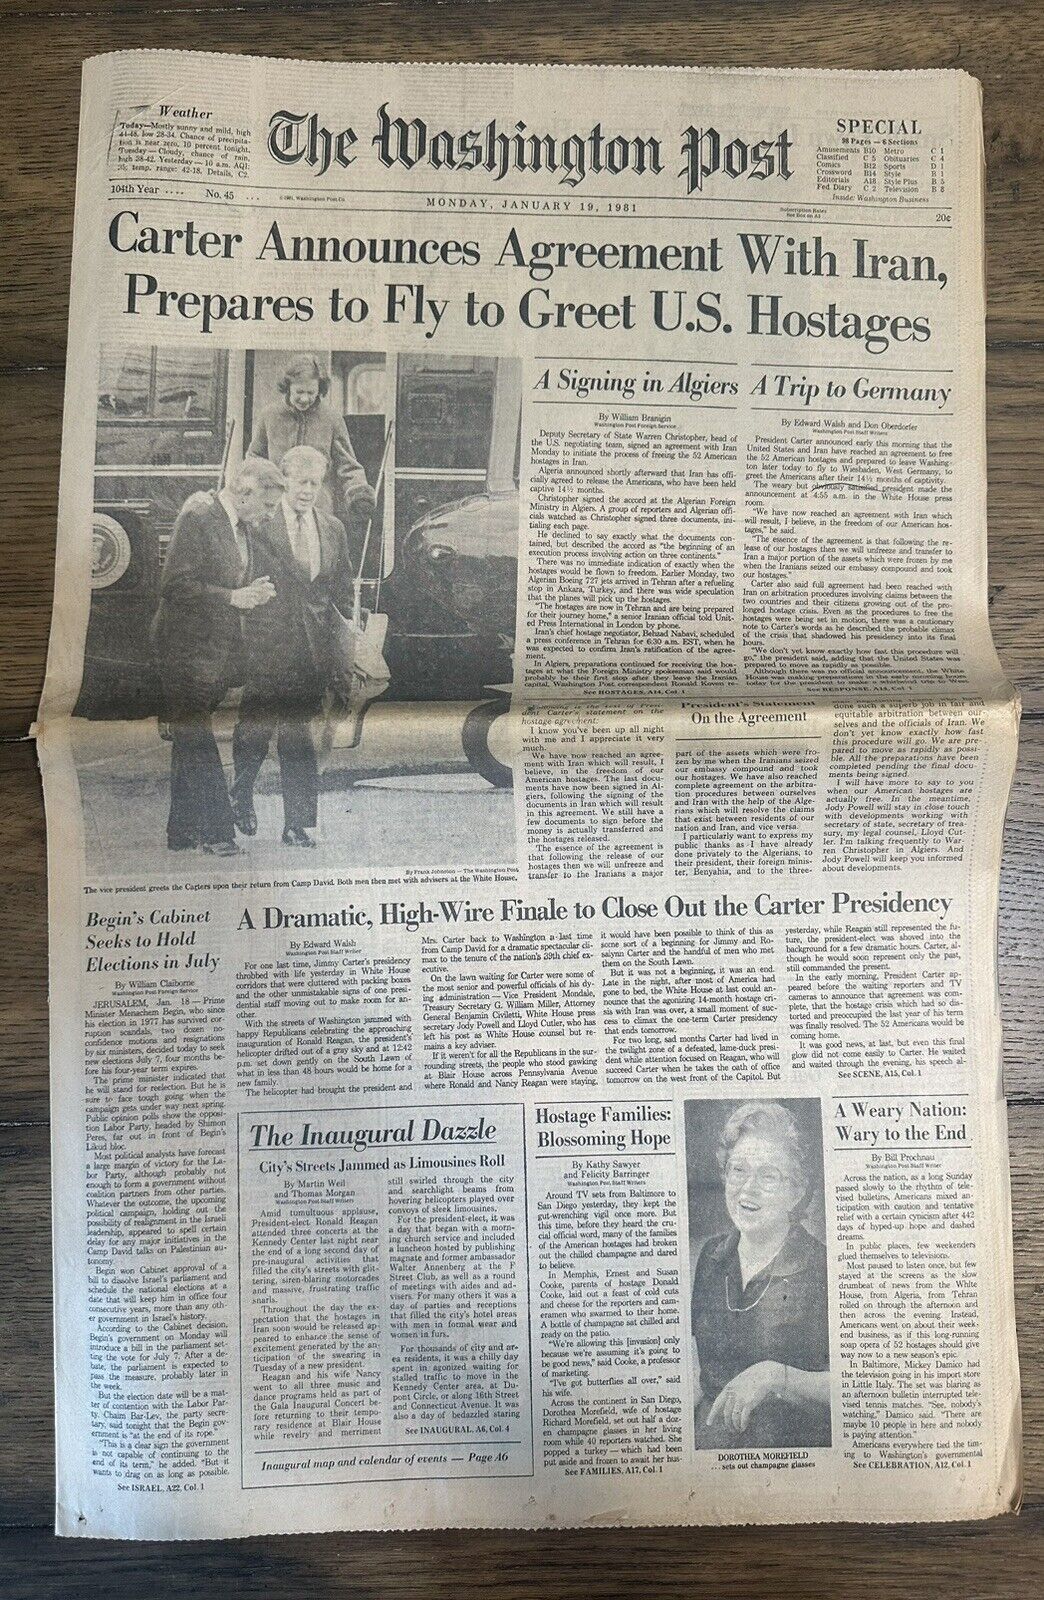 Washington Post Jan 19, 1981 Cater/ Iran Hostages Ronald Reagan Inaugural 